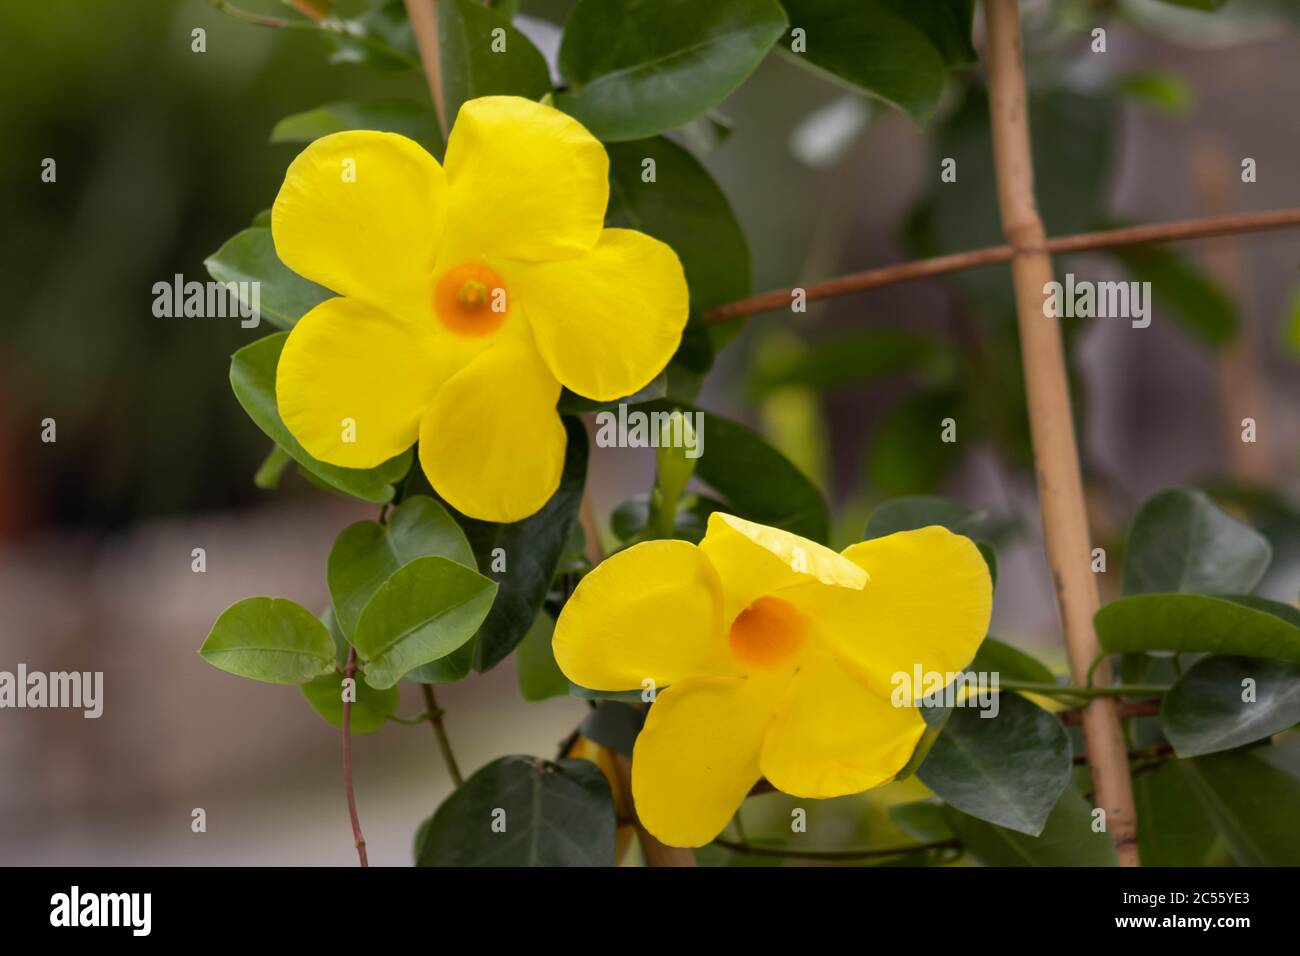 Closeup shot of yellow rocktrumpet flowers in a garden Stock Photo